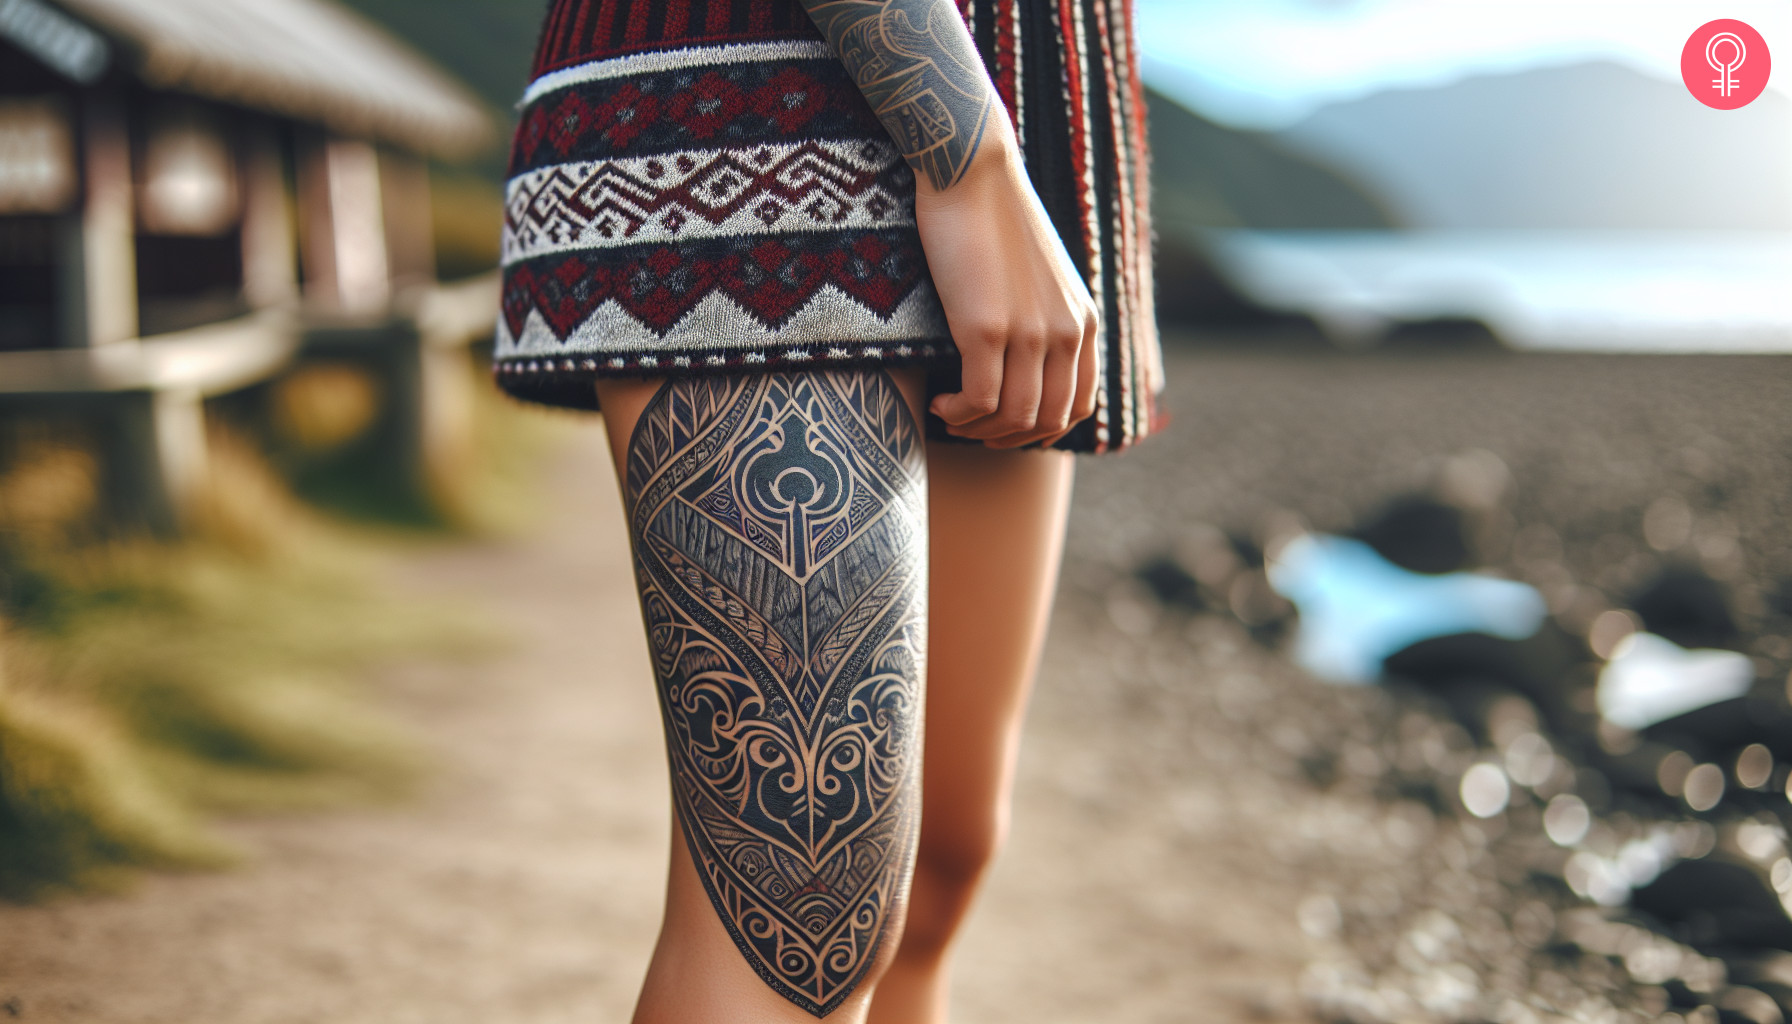 Maori thigh tattoo on a woman